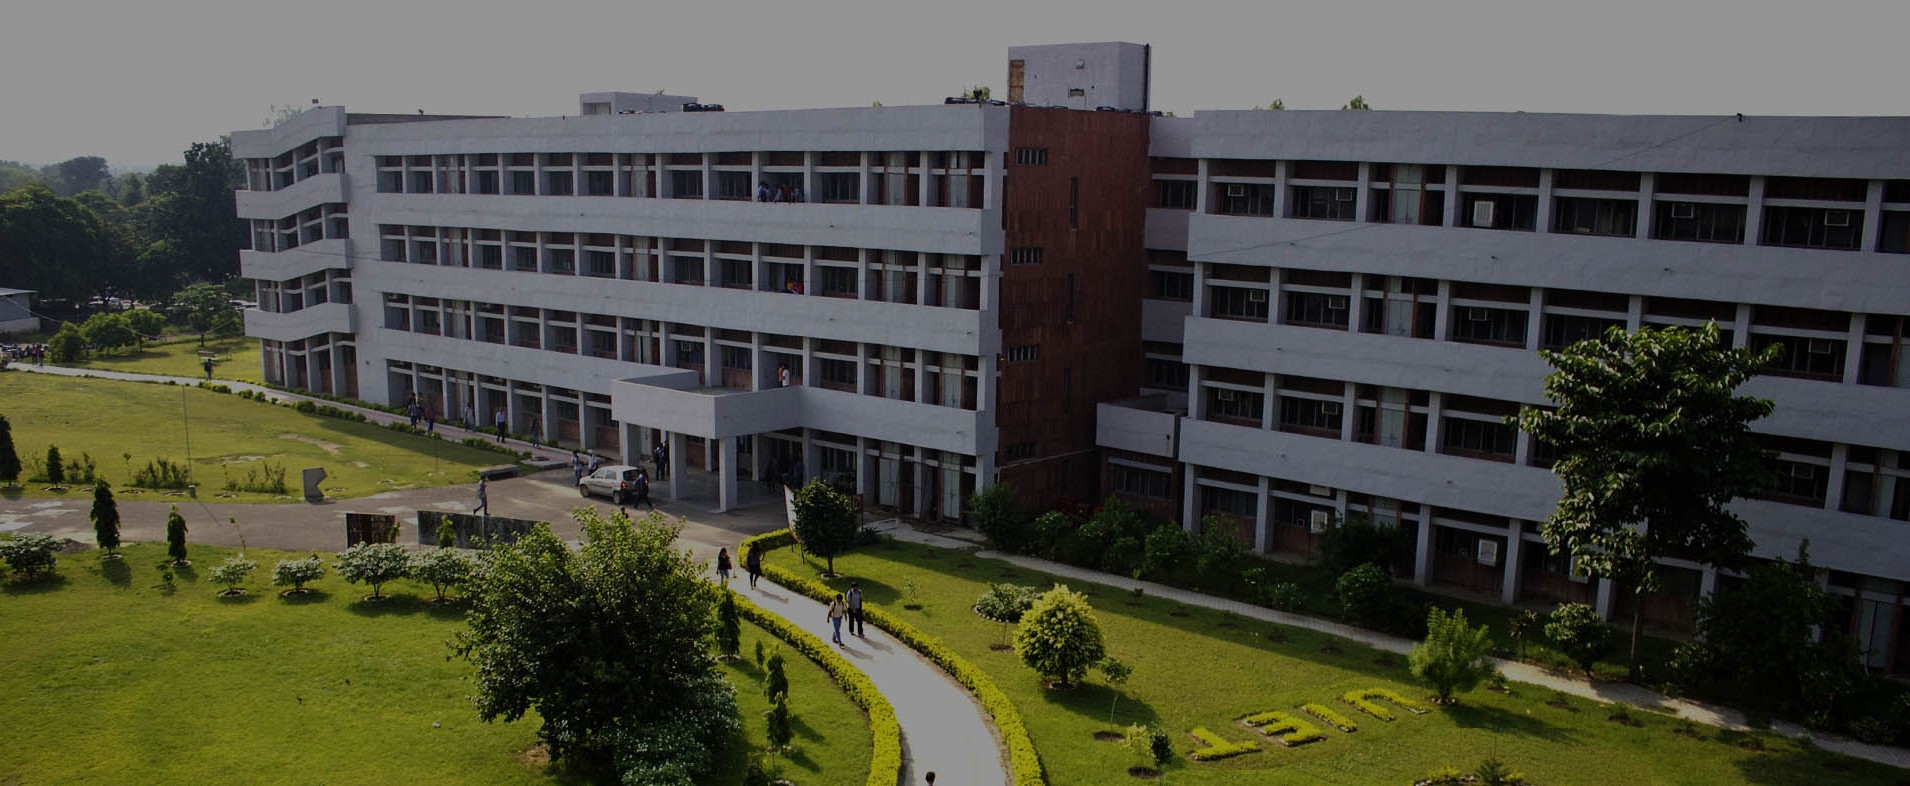 University Institute of Engineering and Technology, Chandigarh Image